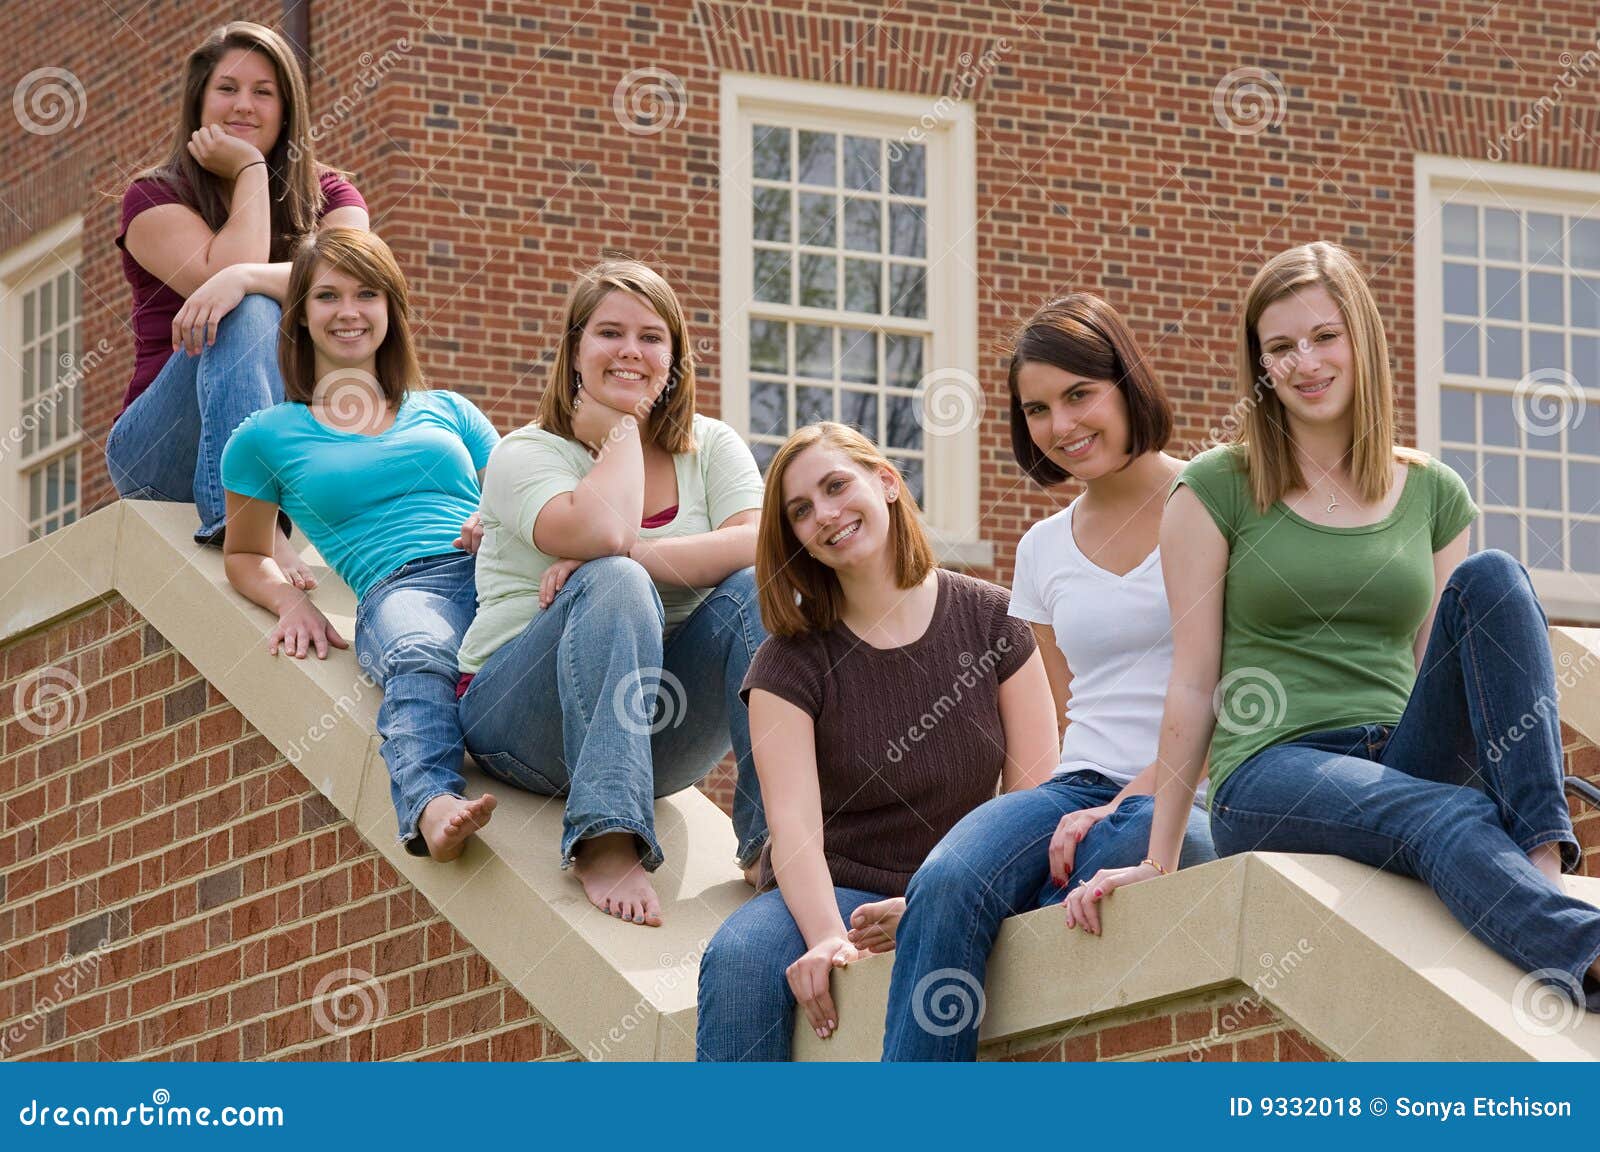 Girls college 101 Chic